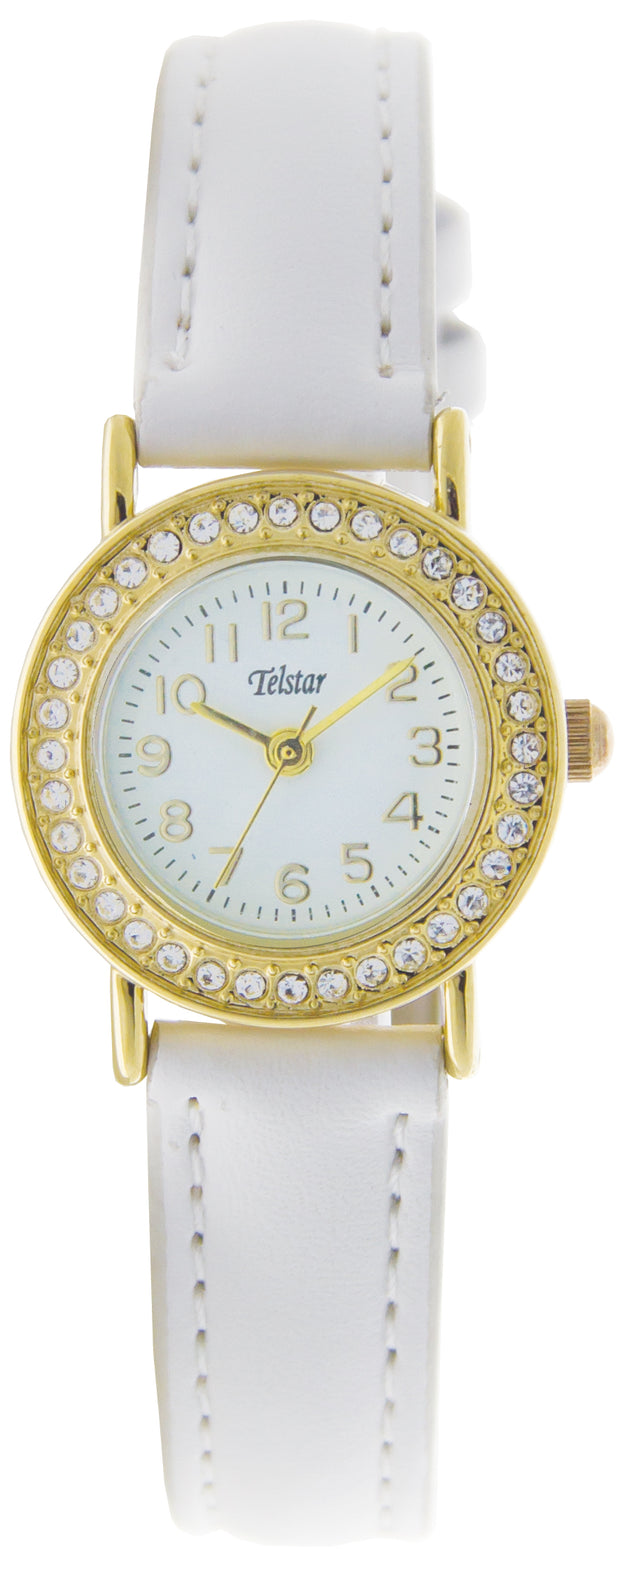 White strap girls Communion Telstar watch with crystals 13901